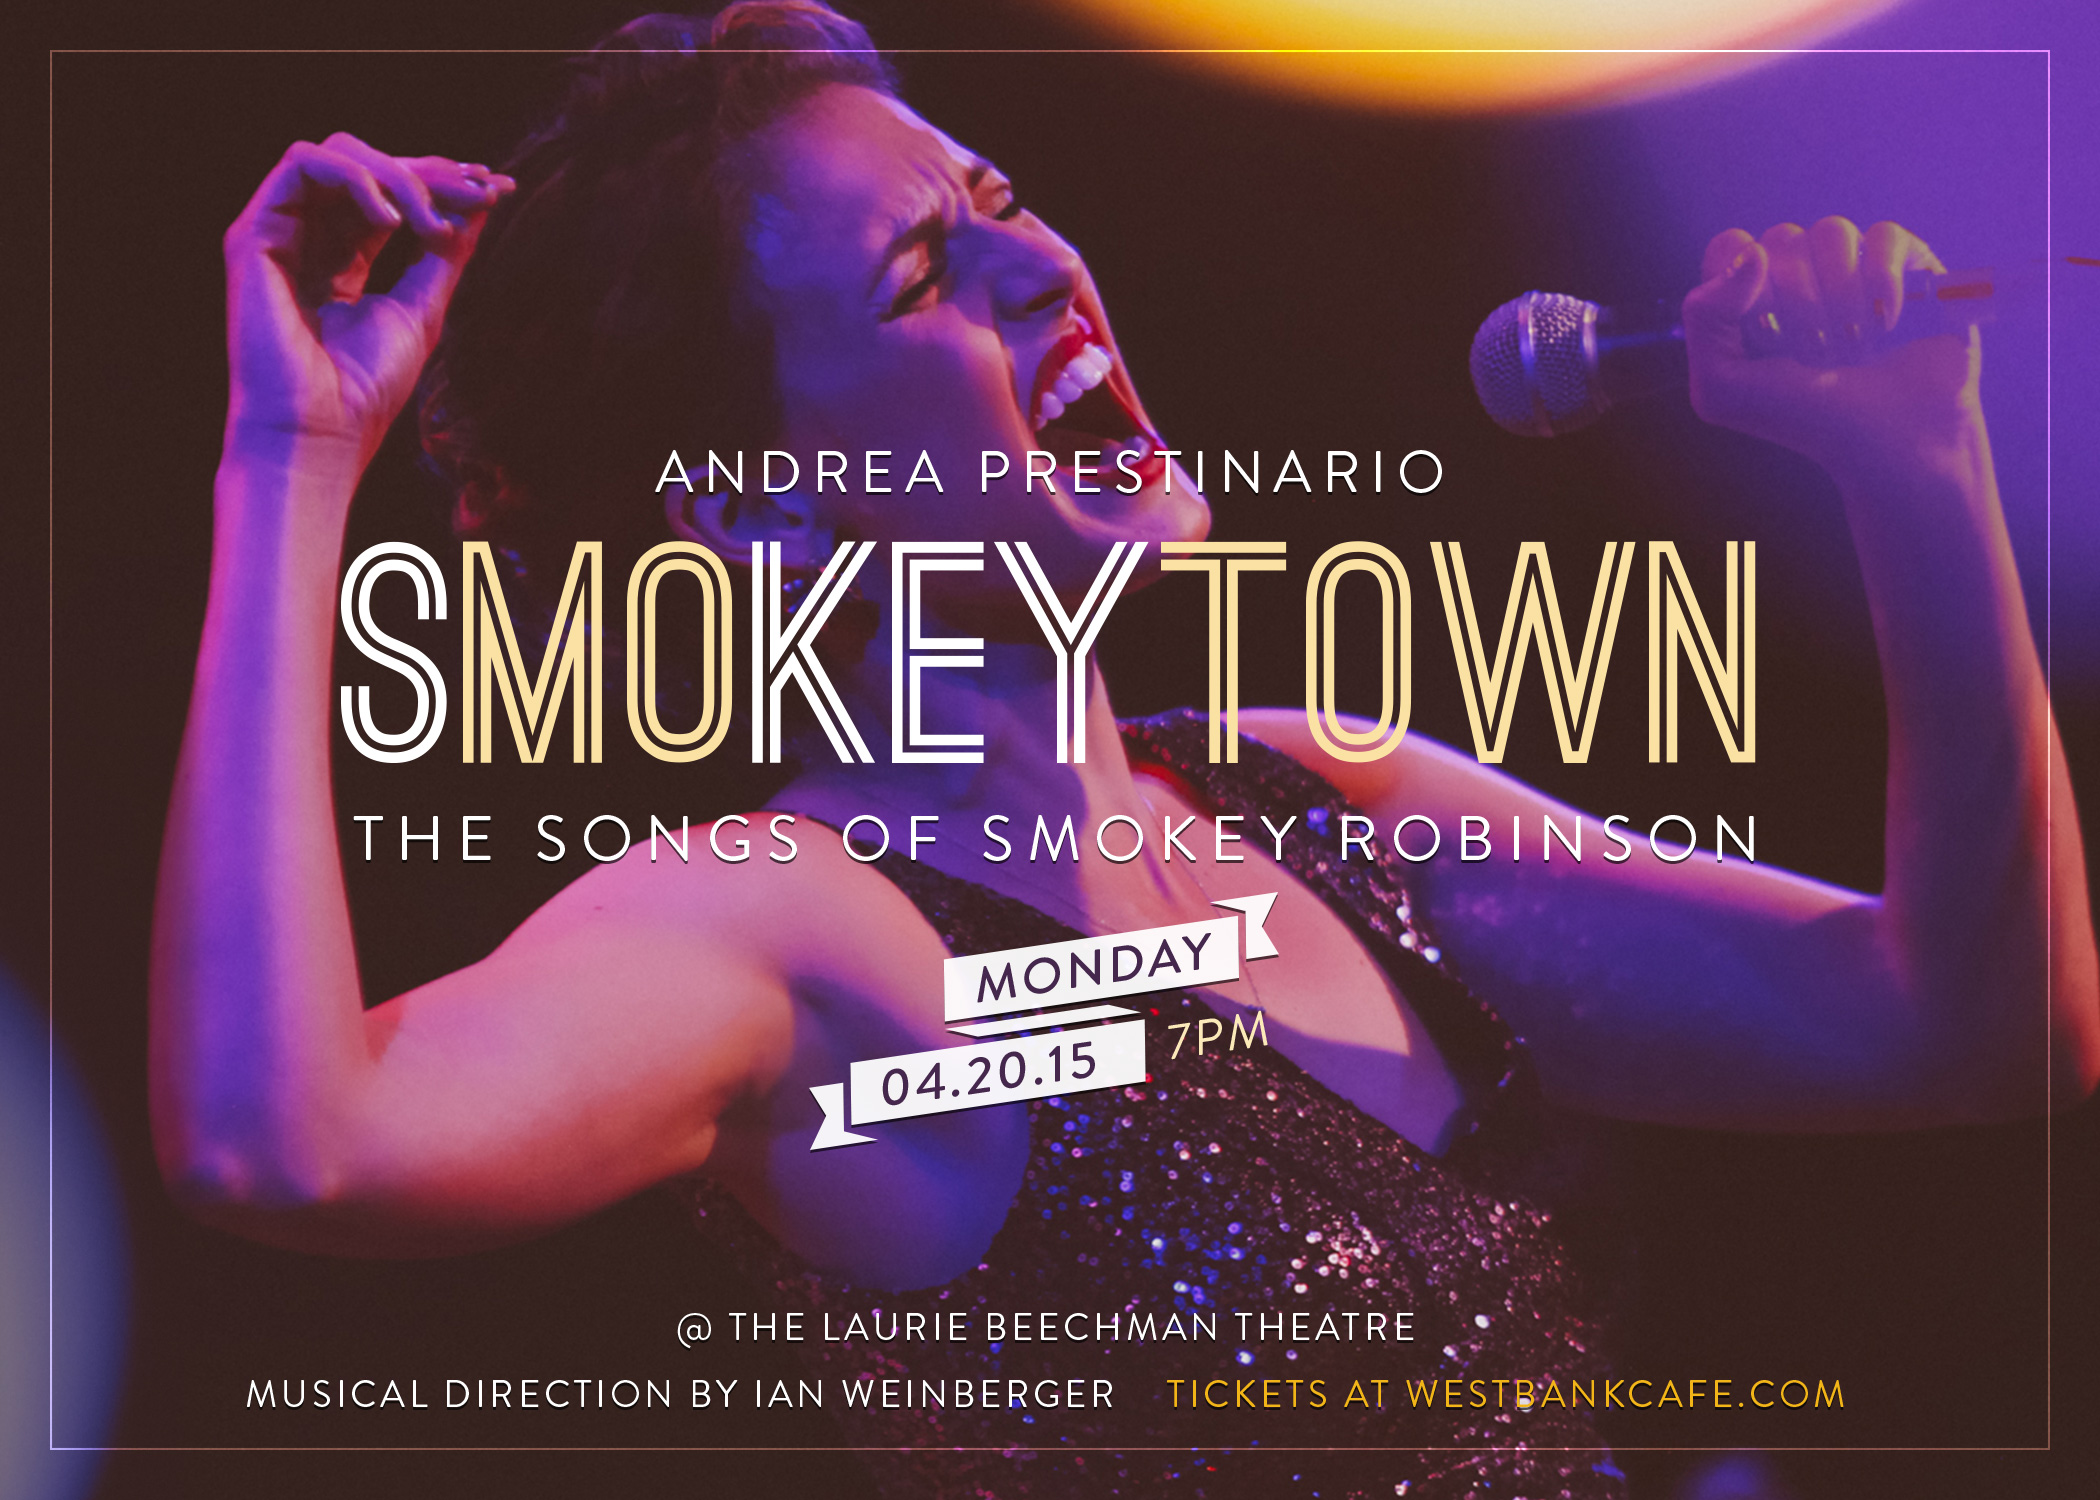 smokeytown-the-songs-of-smokey-robinson_18317443924_o.jpg